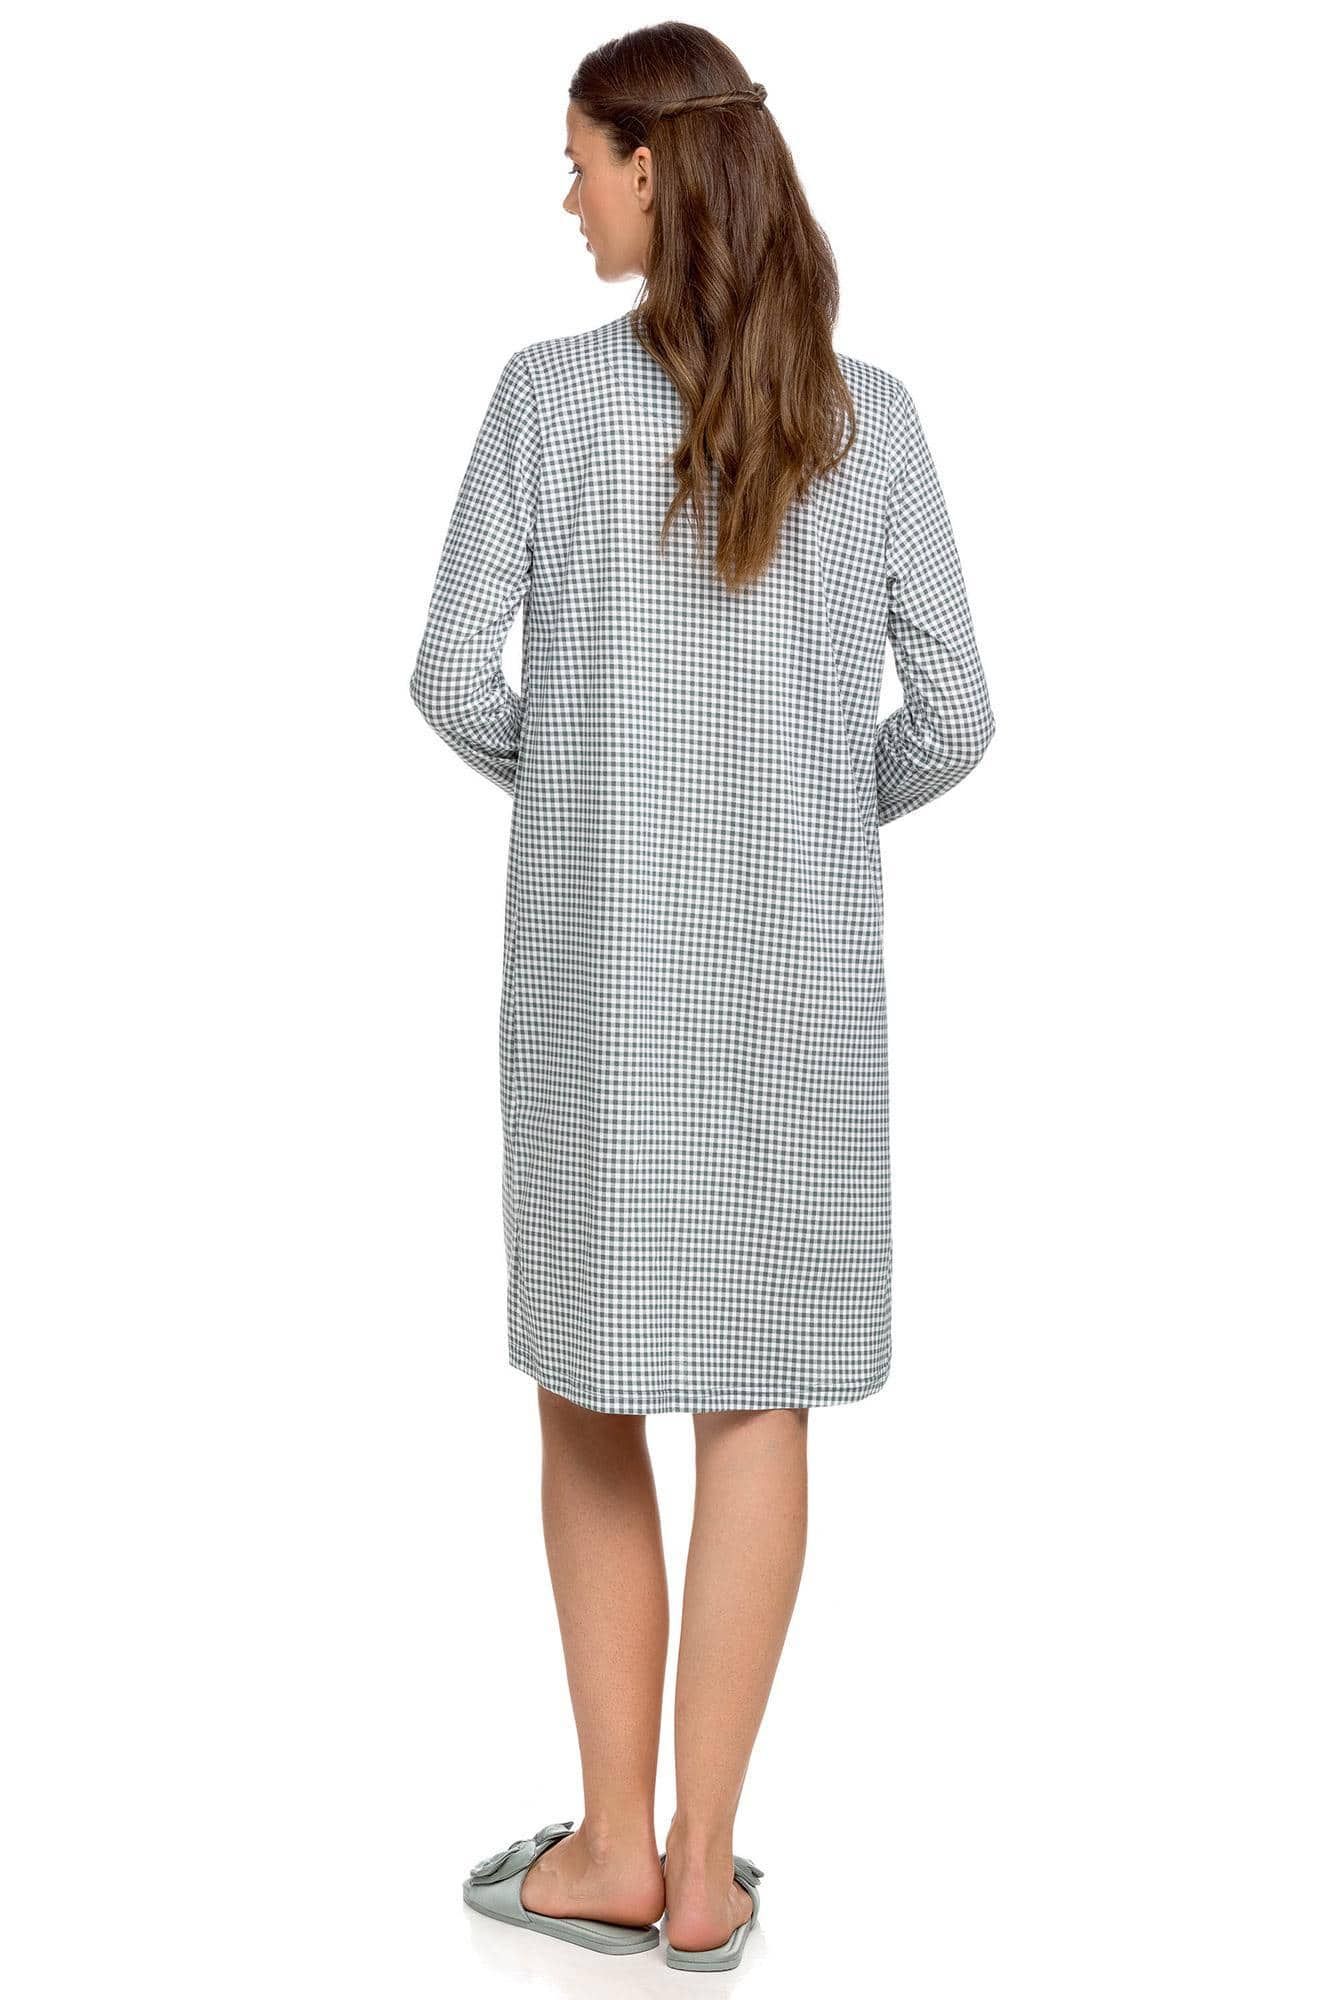 Women’s plaid nightgown